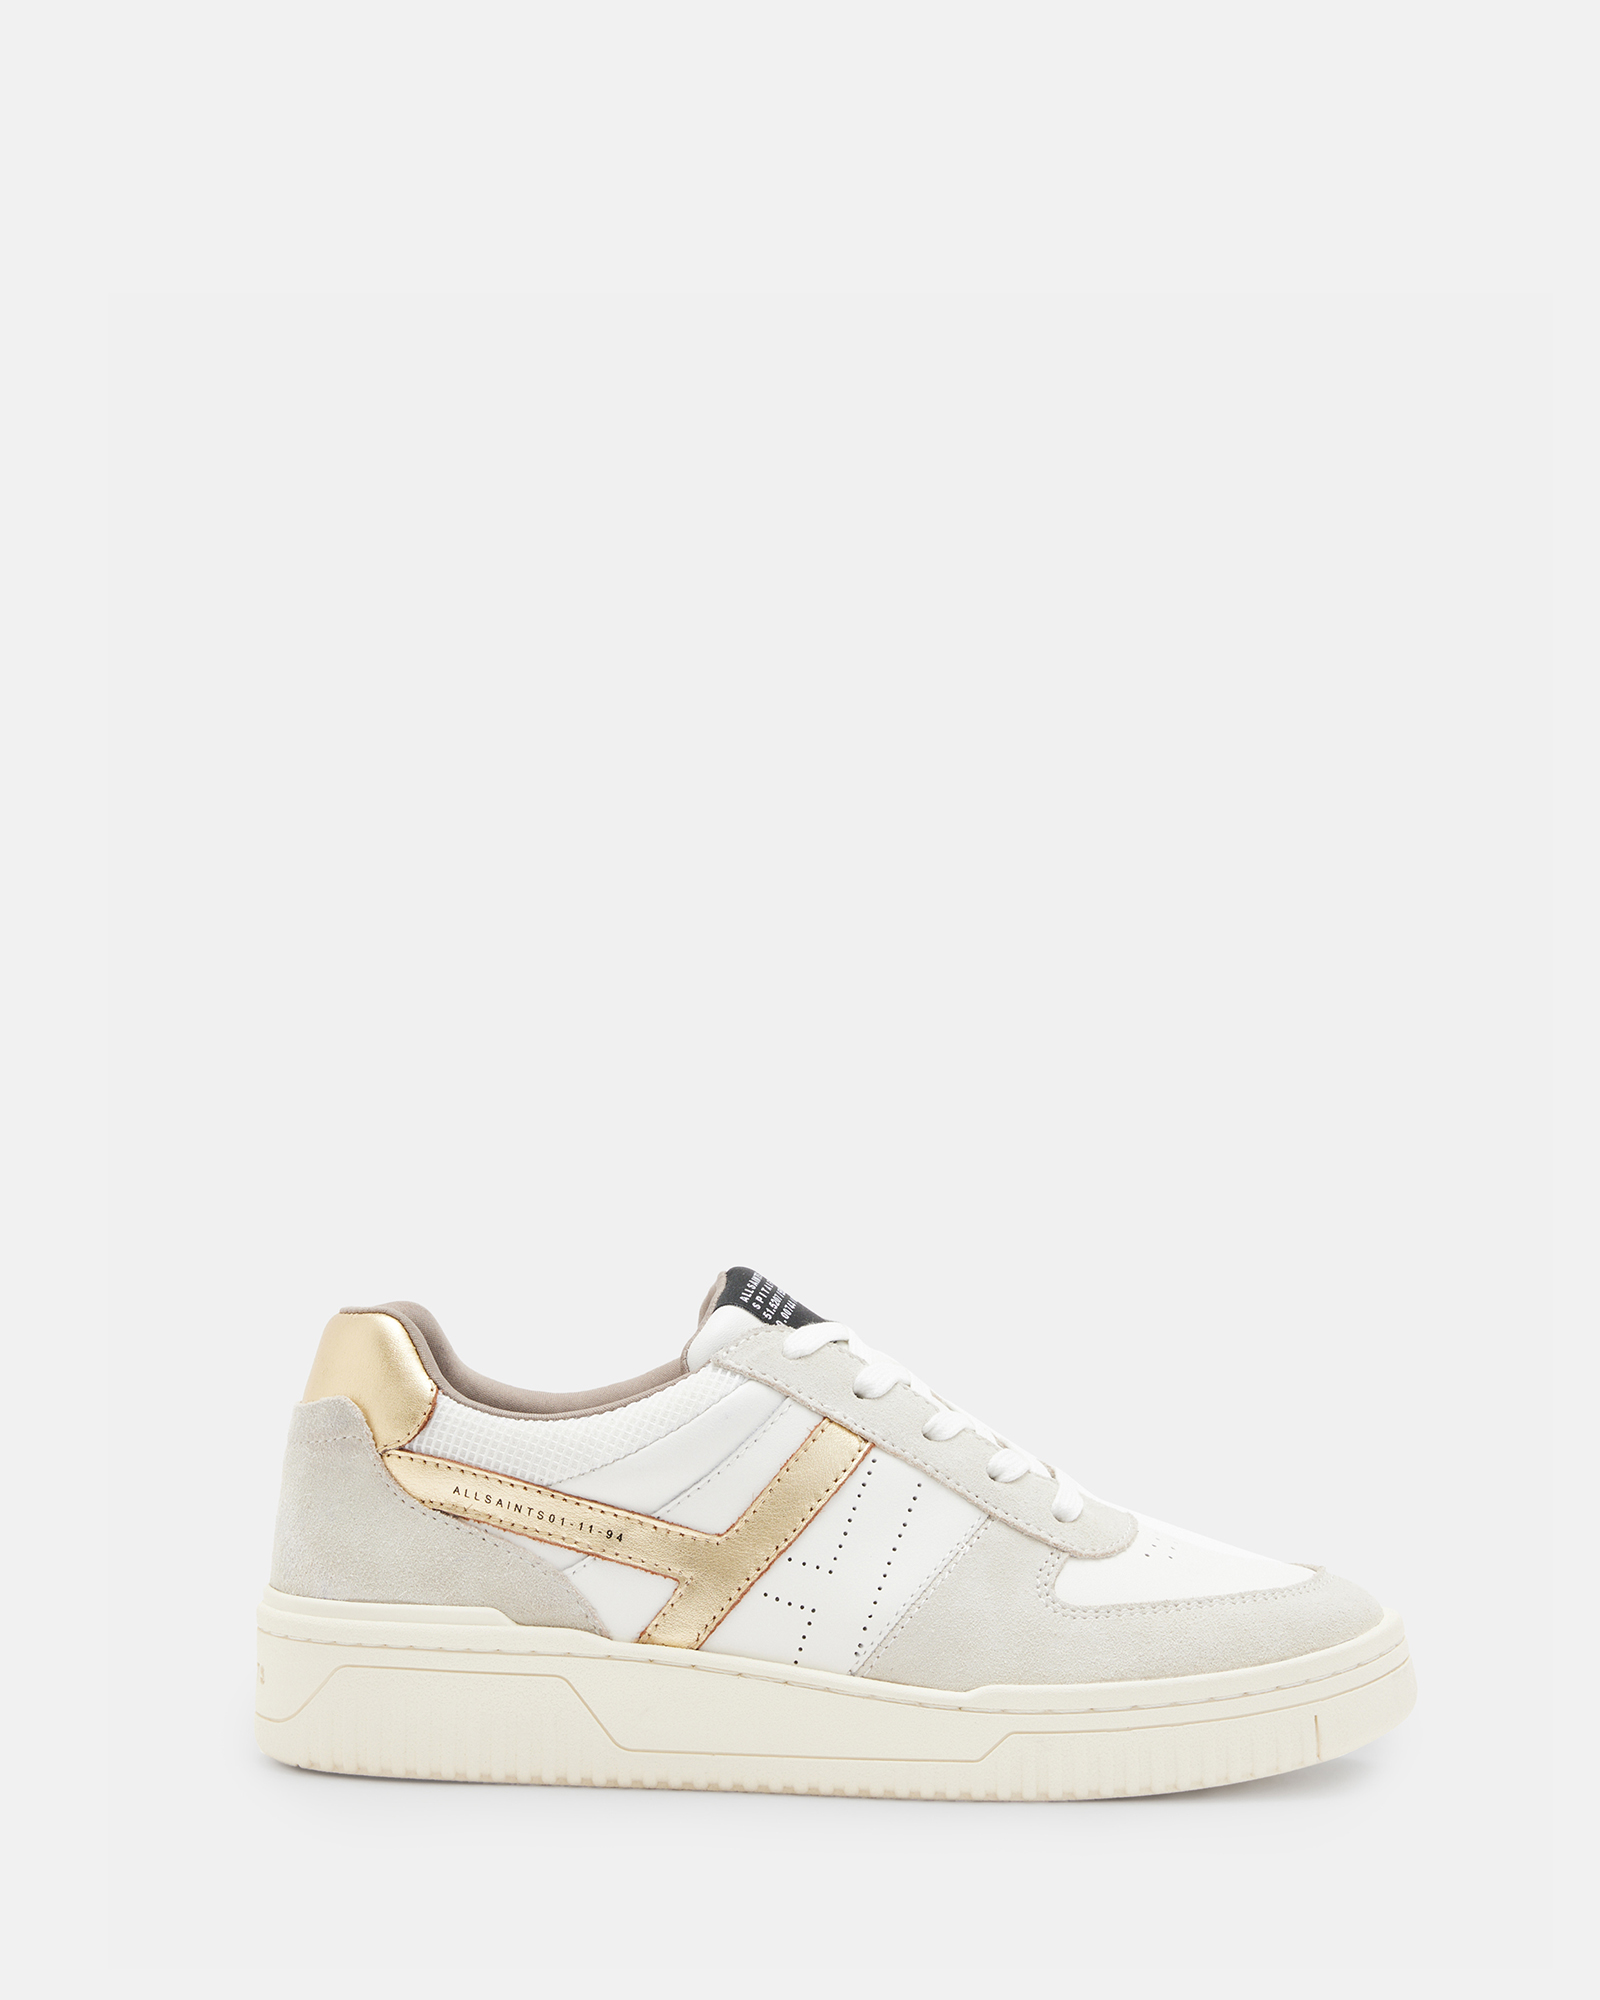 Vix Suede Low Top Sneakers WHITE/GOLD | ALLSAINTS US